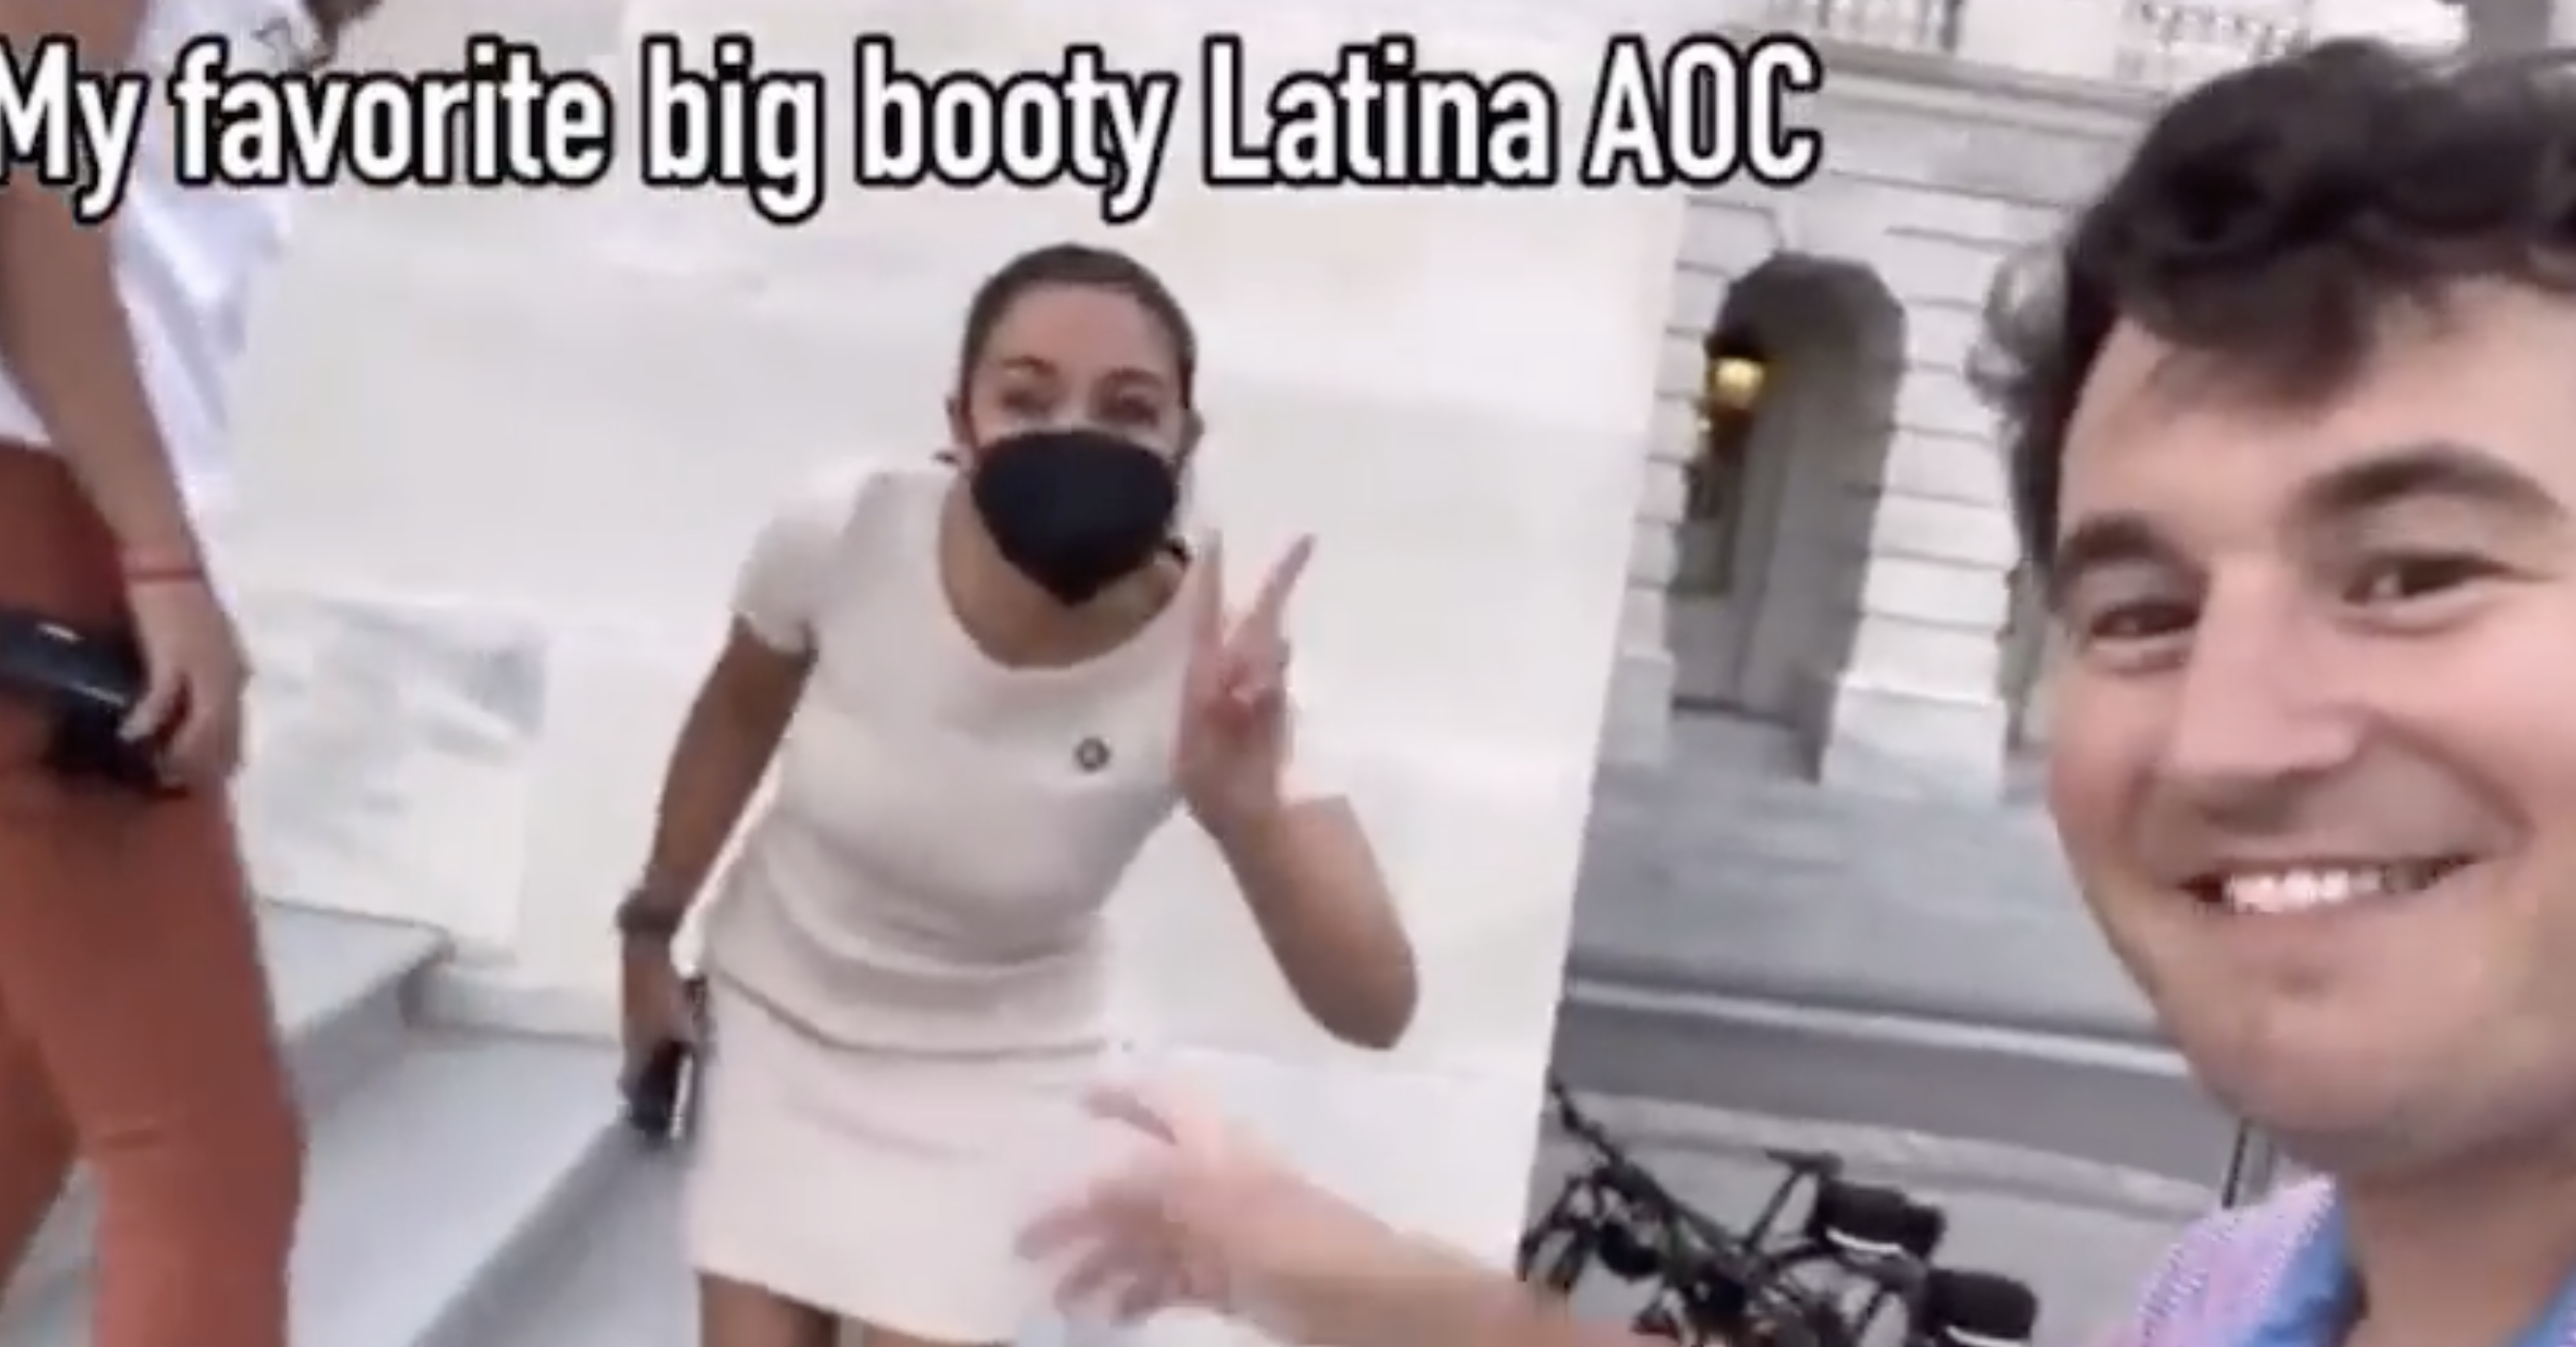 acelia mills share big booty latina gets interviewed photos